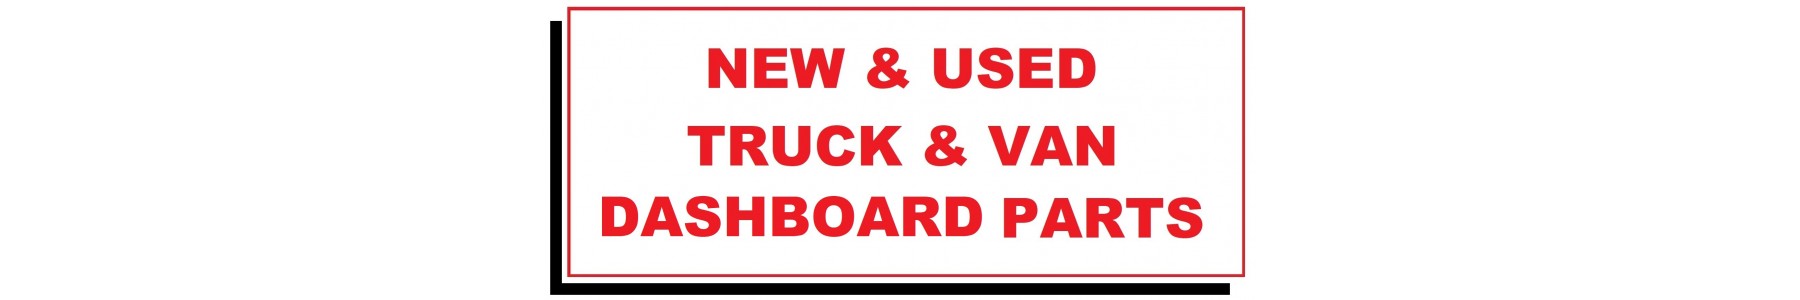 NEW & USED VAN DASHBOARD PARTS